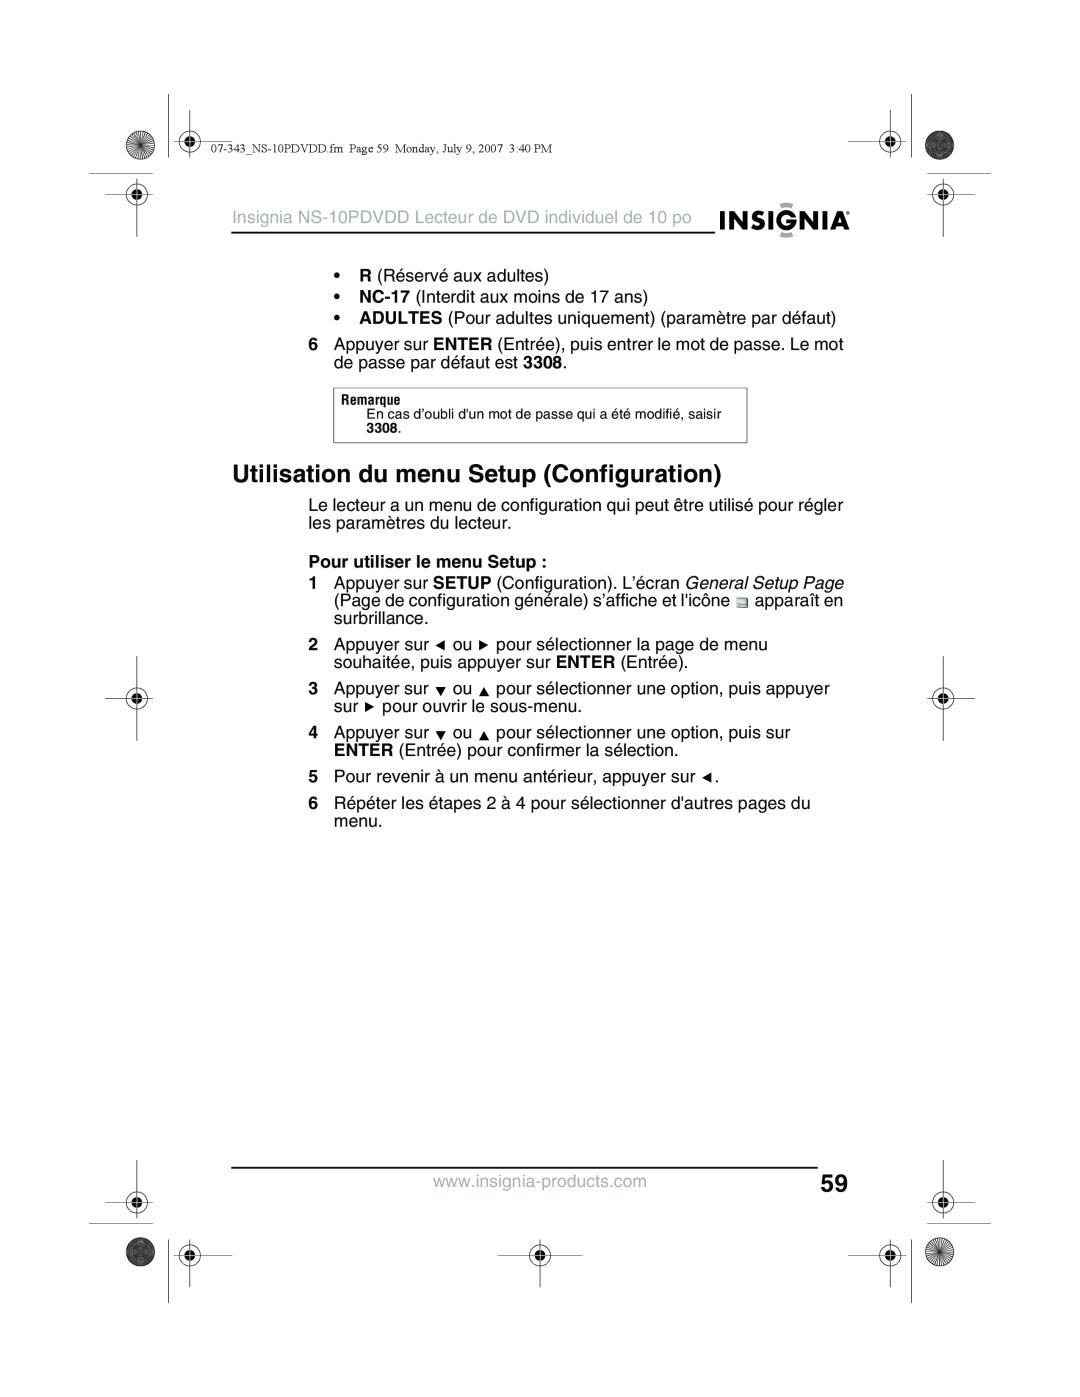 Insignia NS-10PDVDD manual Utilisation du menu Setup Configuration, Pour utiliser le menu Setup 